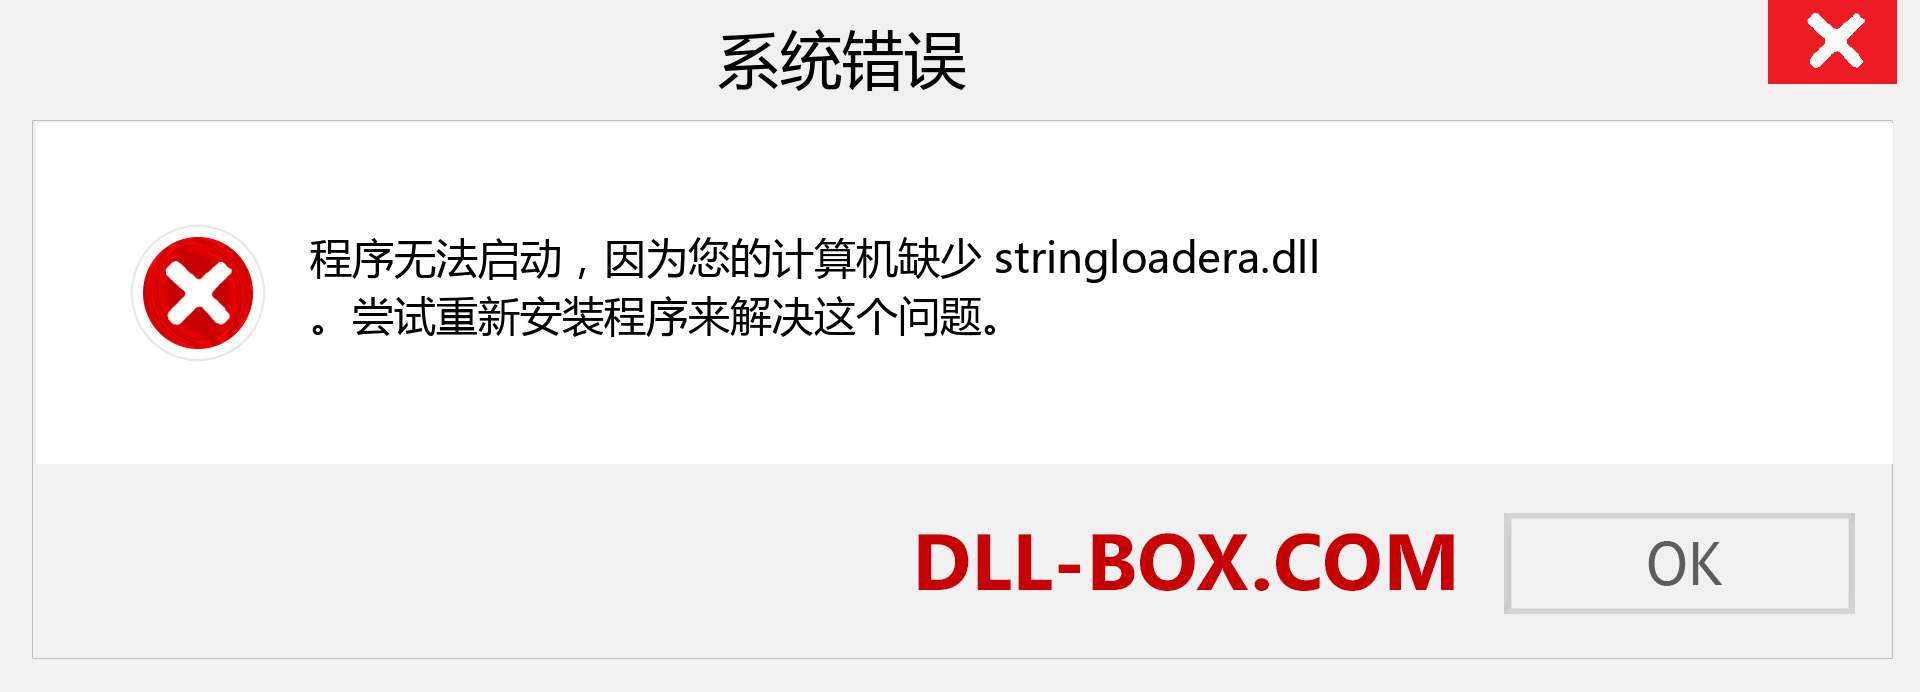 stringloadera.dll 文件丢失？。 适用于 Windows 7、8、10 的下载 - 修复 Windows、照片、图像上的 stringloadera dll 丢失错误